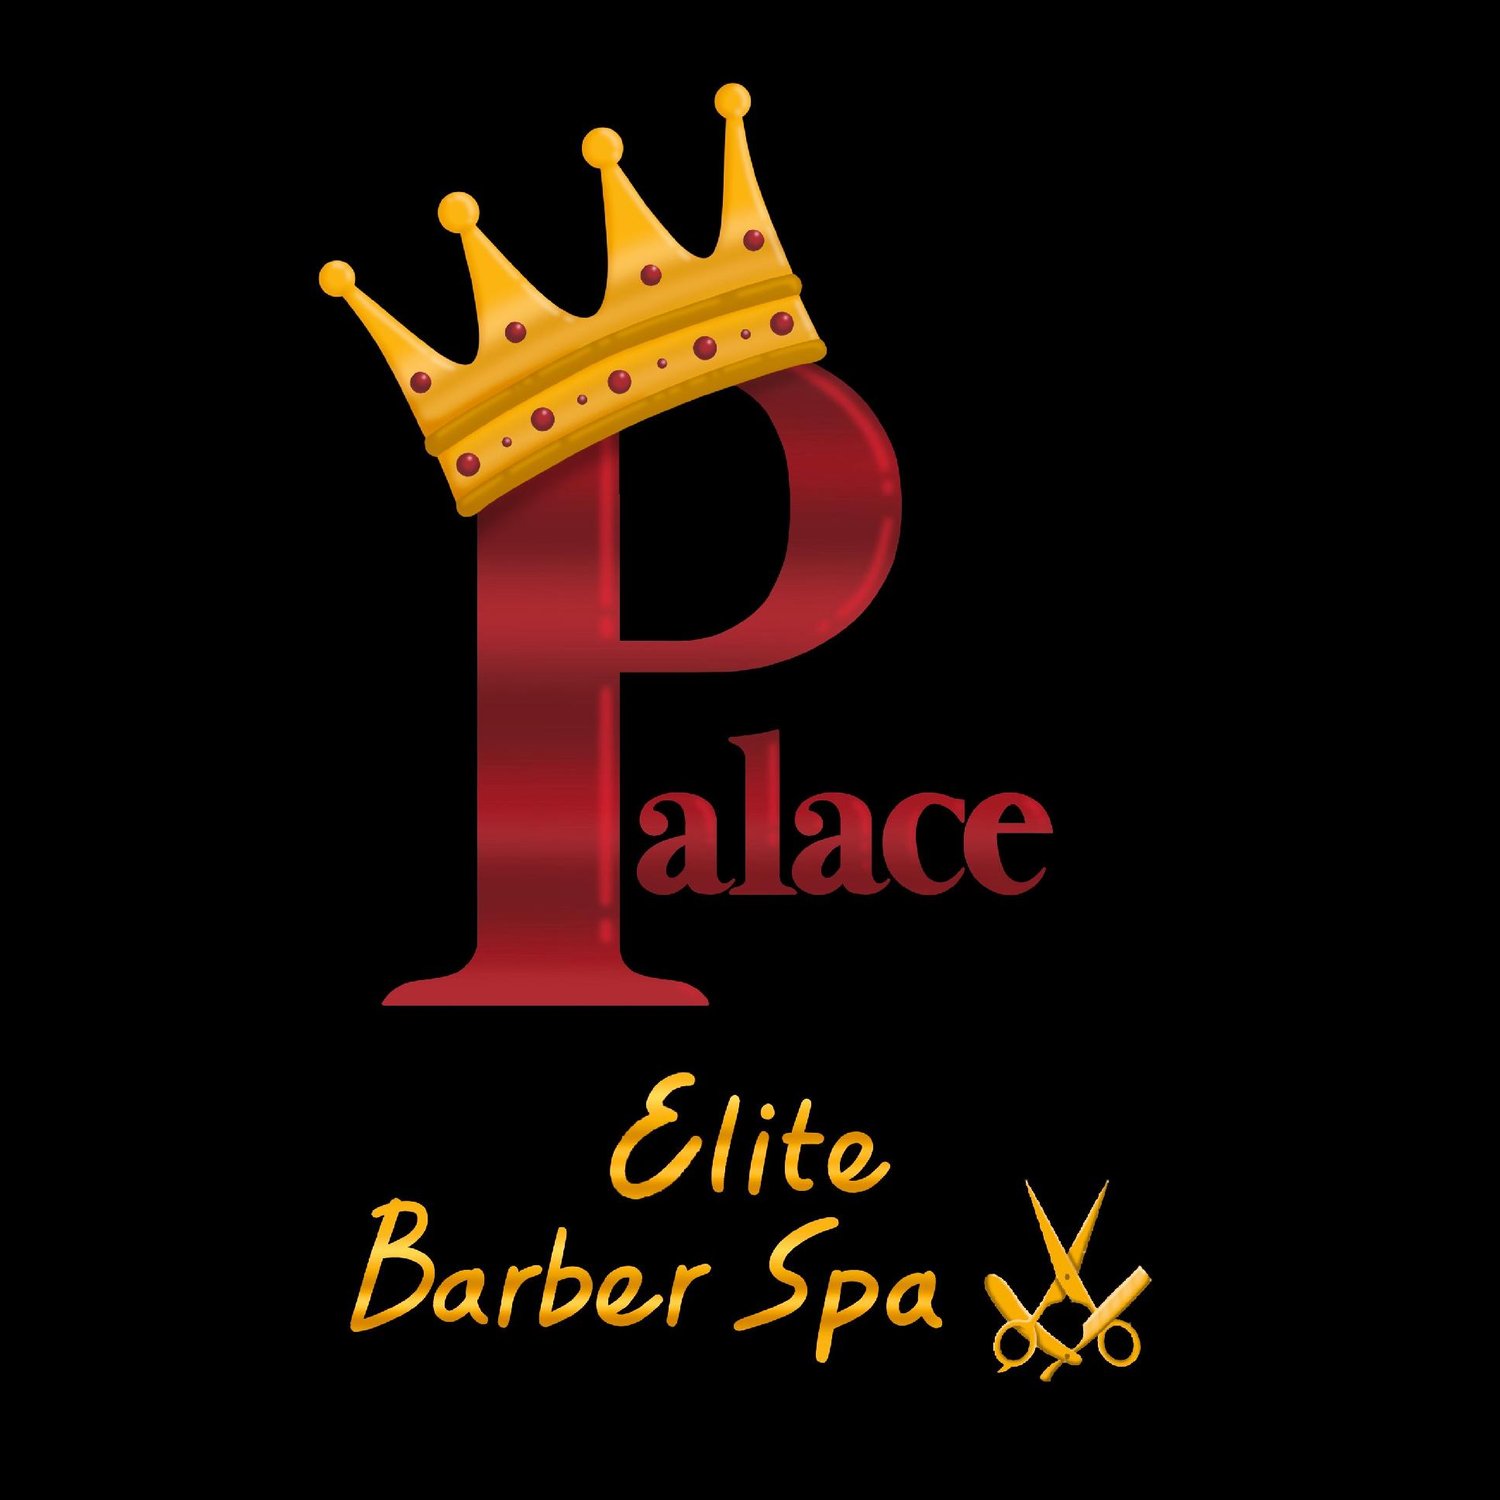 Palace Elite Barber Spa